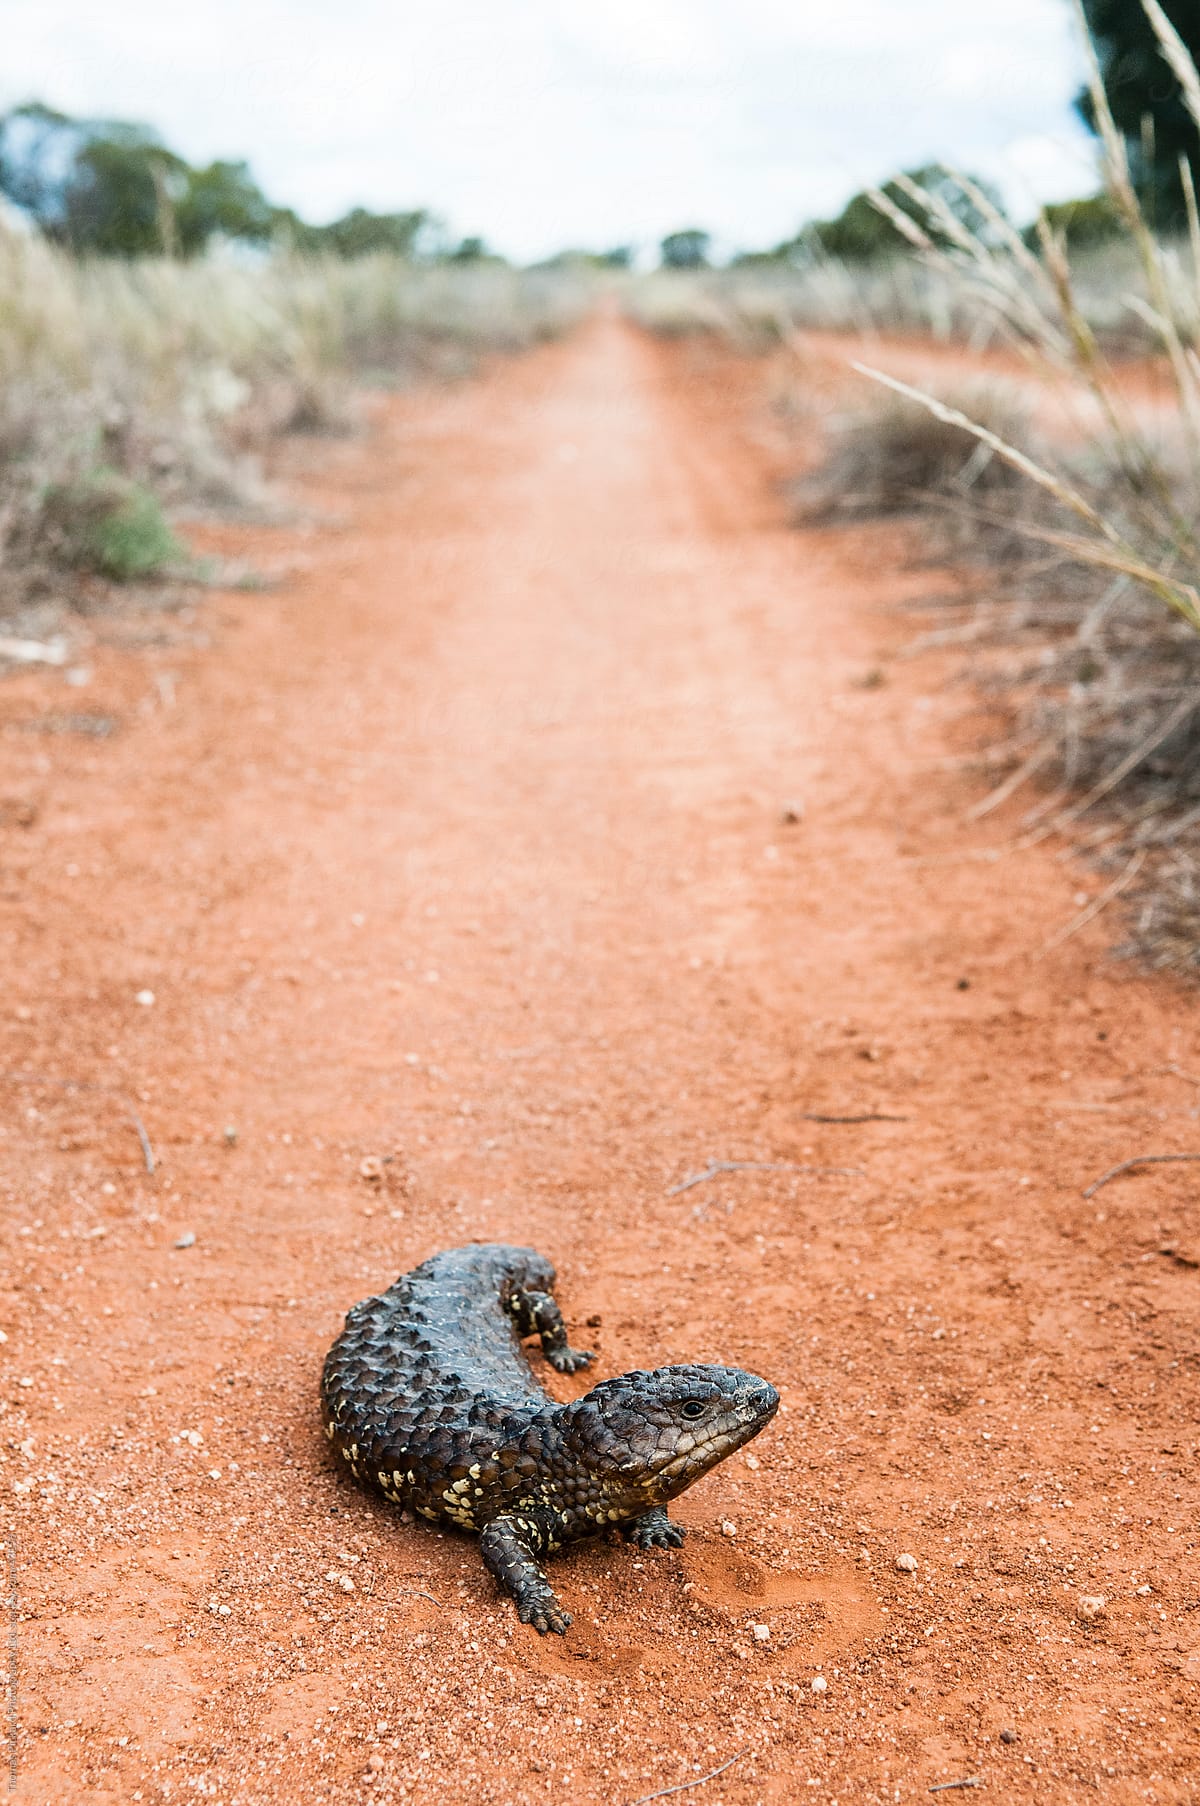 Blue tongue lizard on a dirt track, Australia.